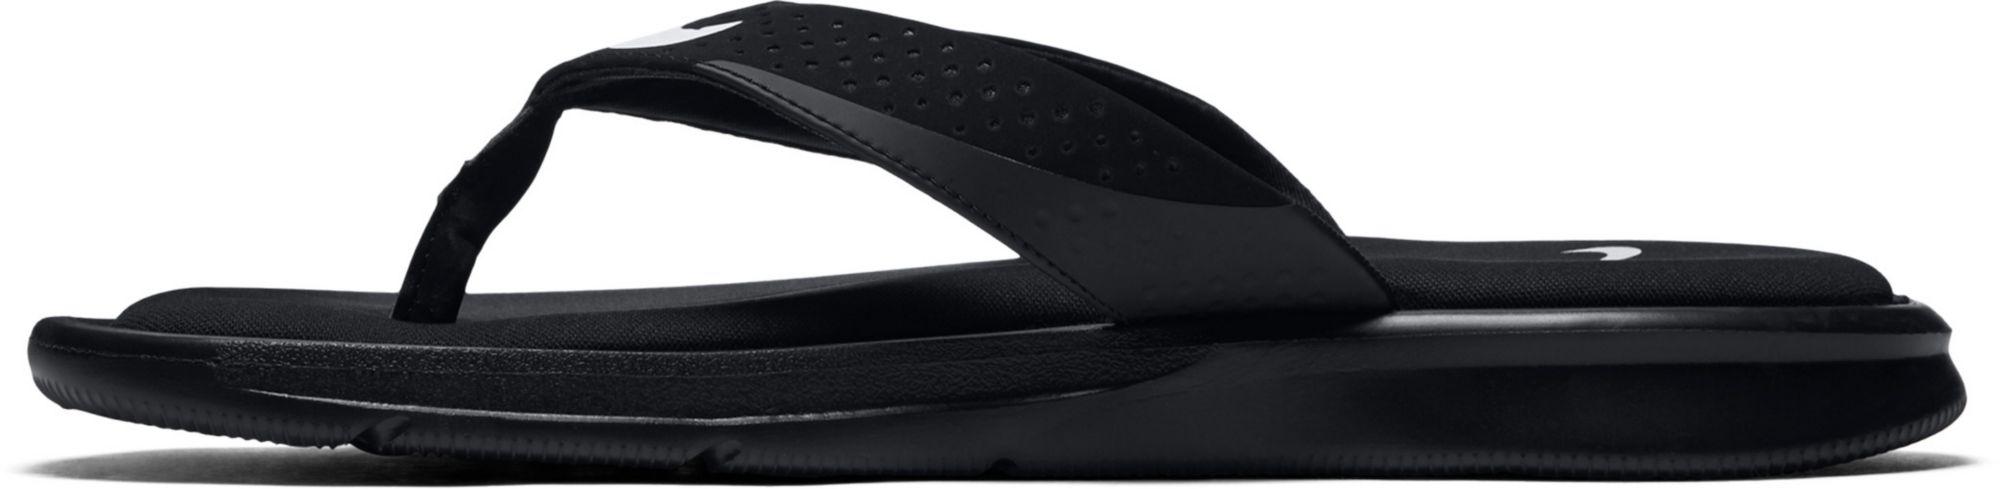 Nike Synthetic Ultra Comfort Thong Flip Flops in Black/White (Black ...